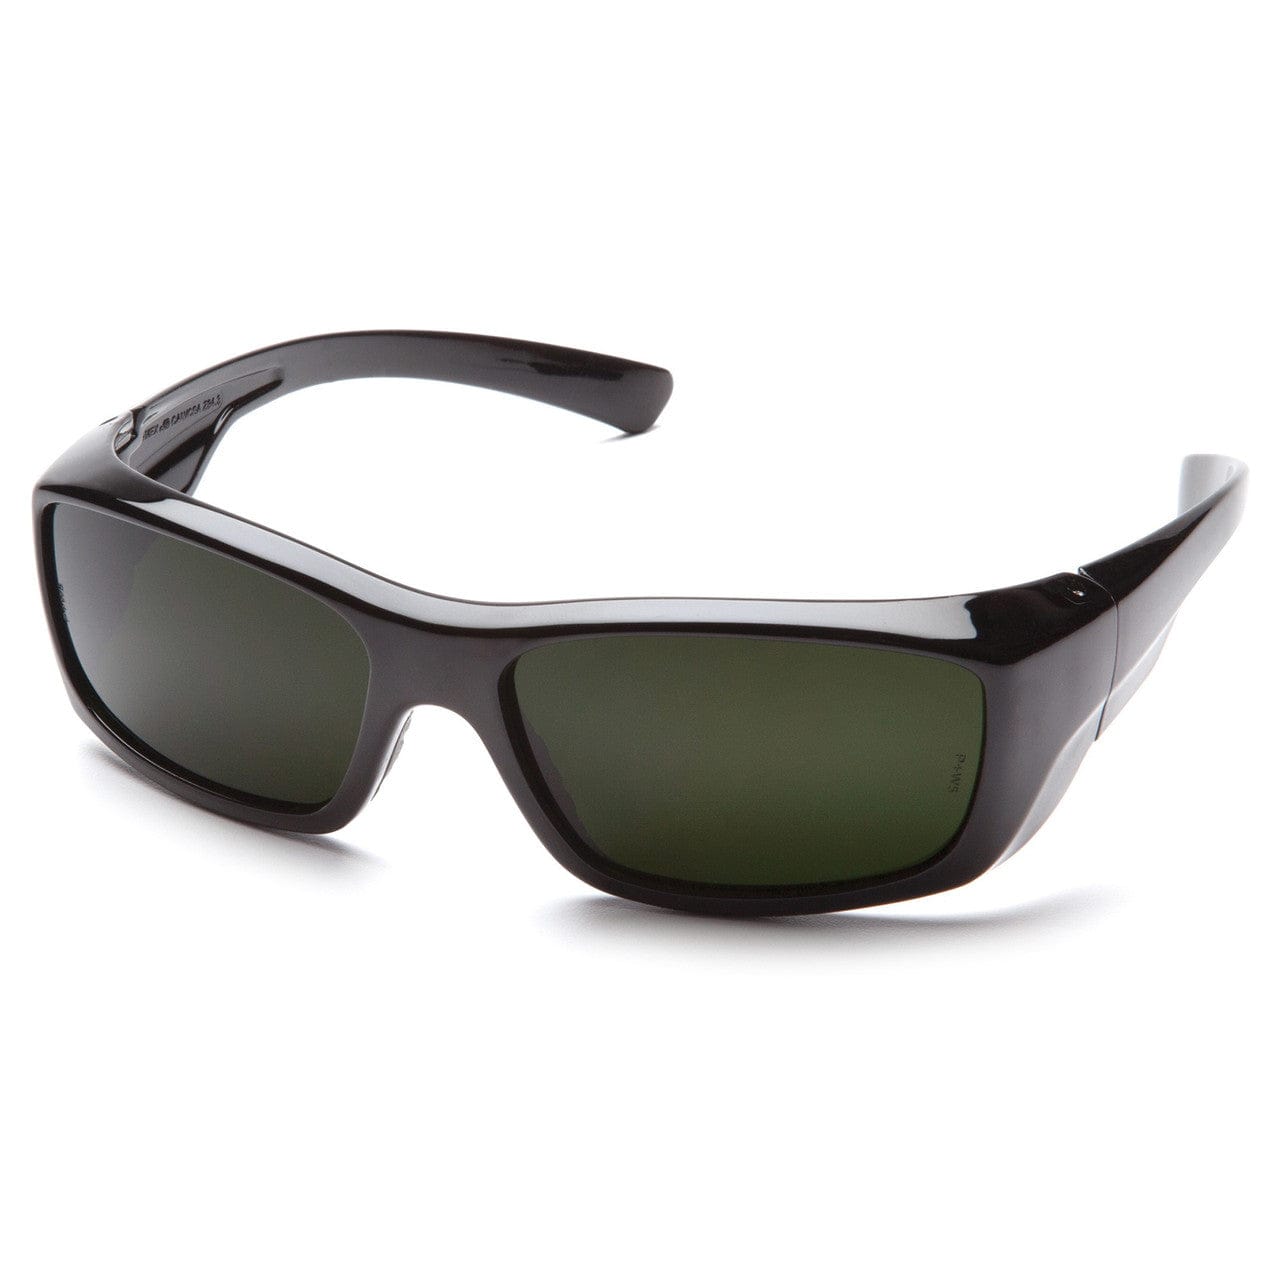 Pyramex Emerge Safety Glasses Black Frame IR Shade 5.0 Lens SB7950SF